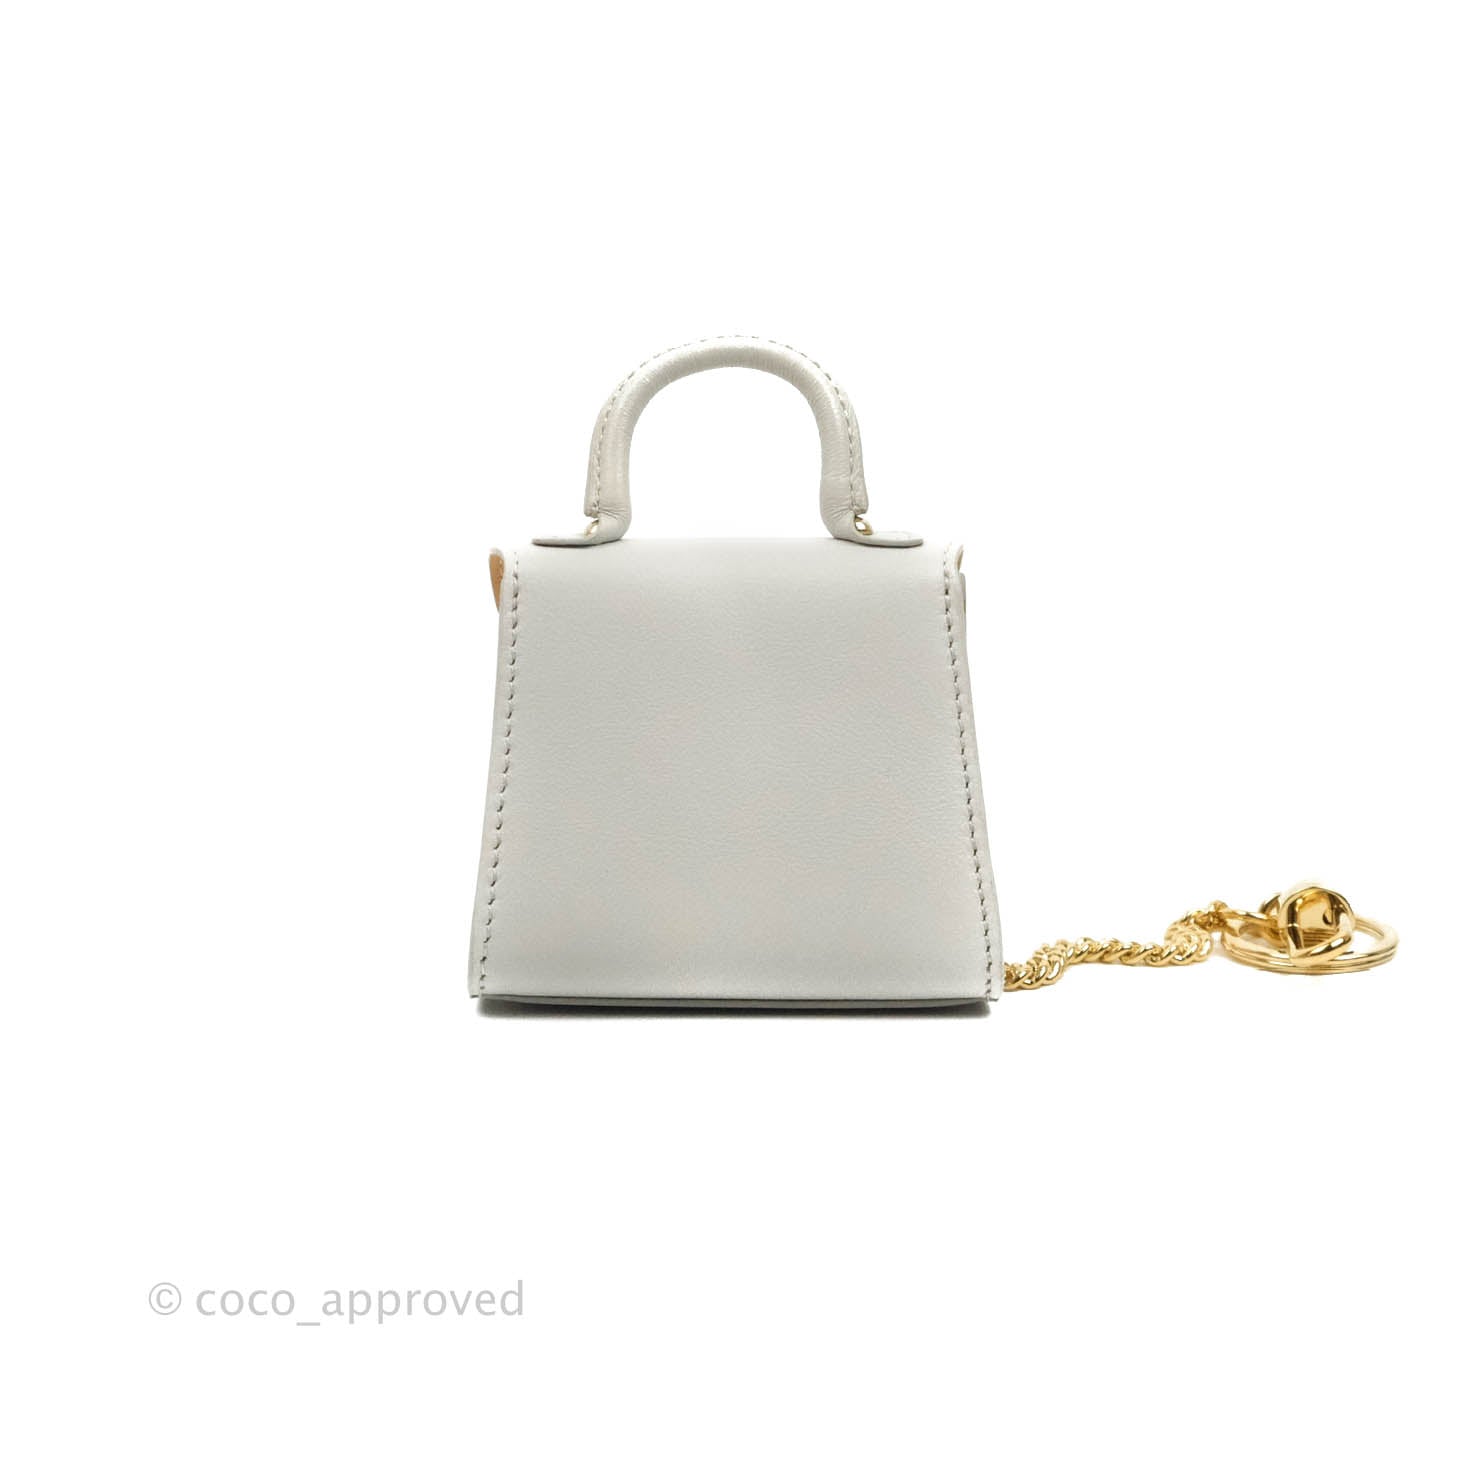 Brillant Mini Collection! #quietluxury #luxurybags #delvauxbags